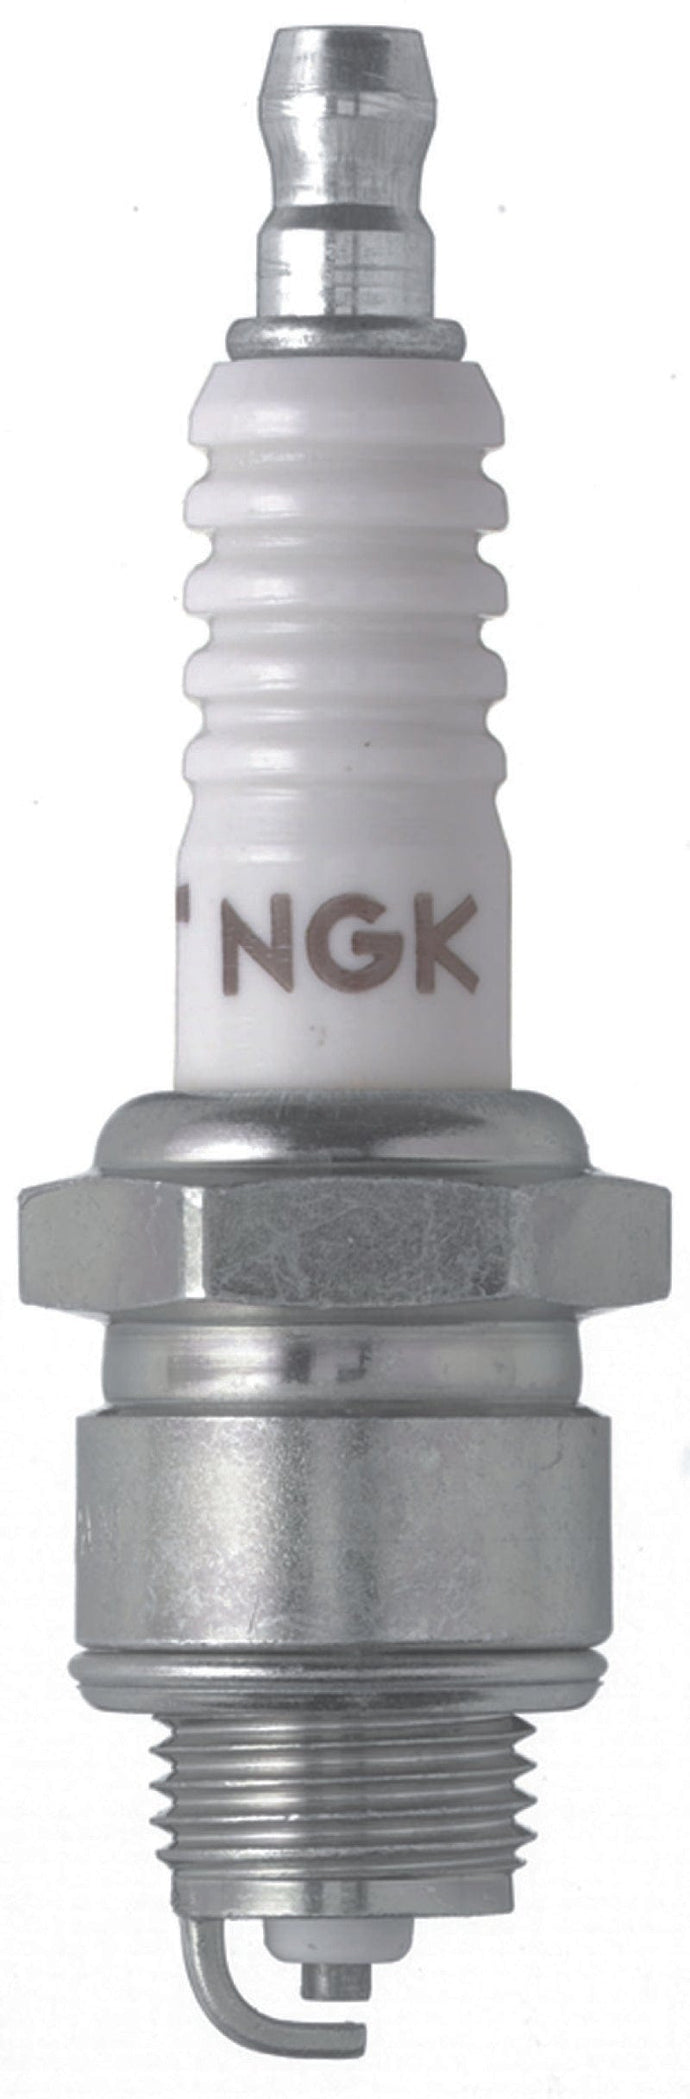 NGK NGK3354